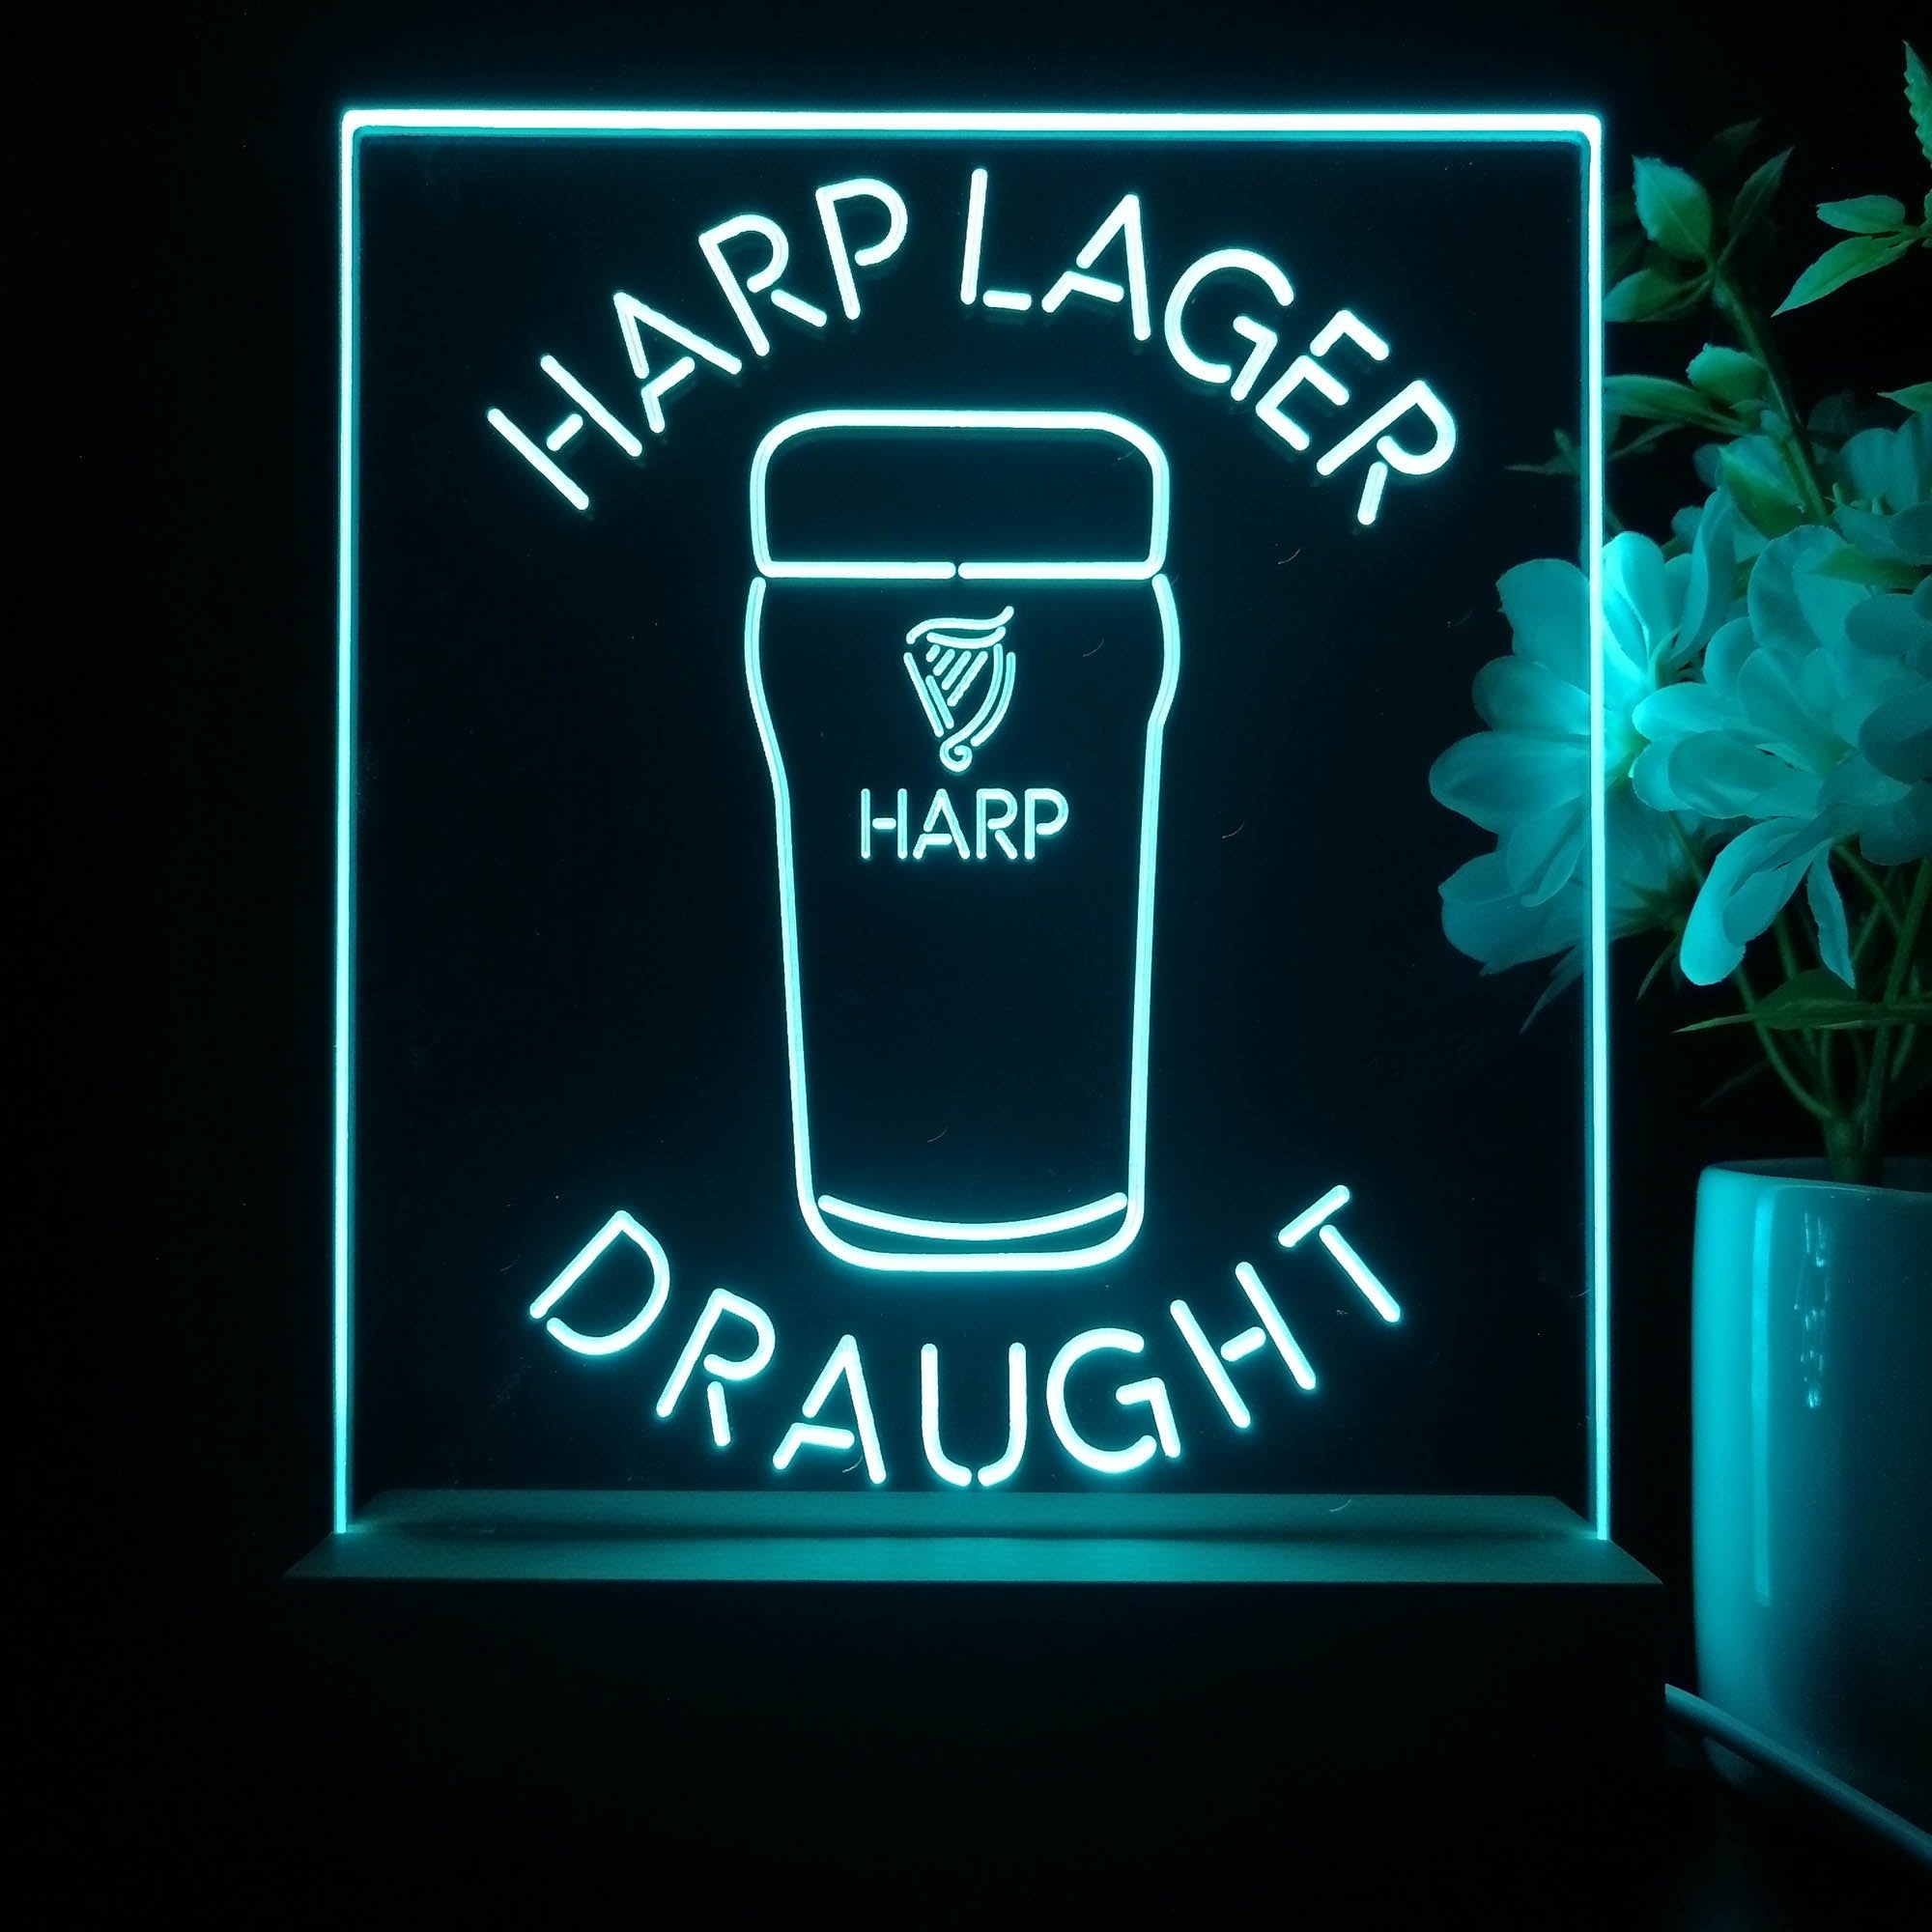 Harp Larger Draught Night Light Neon Pub Bar Lamp